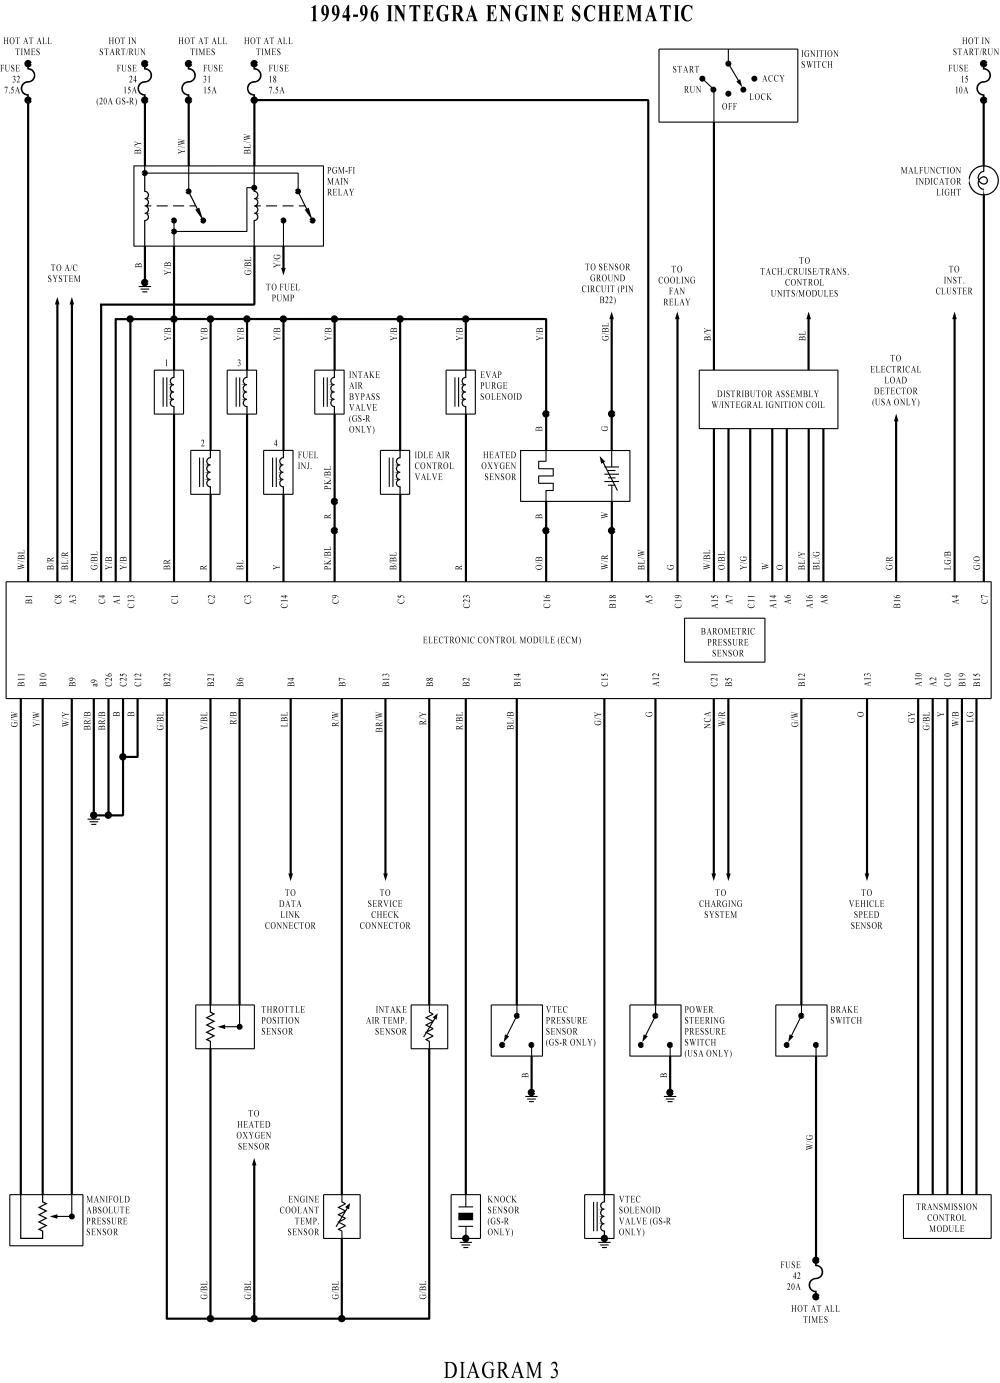 Wiring Diagram For 1991 Acura Integra Hp Photosmart Printer